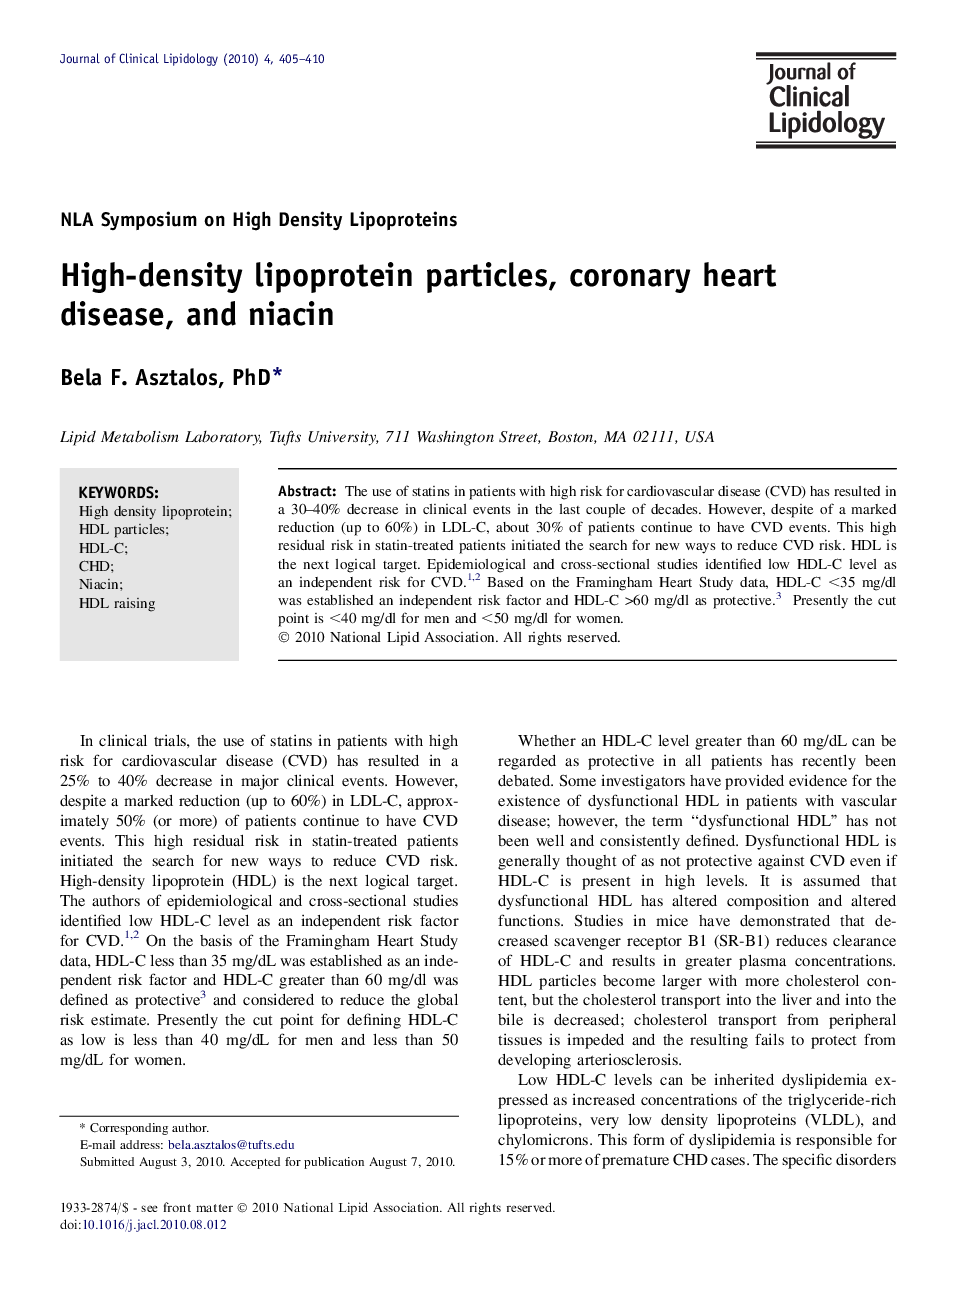 High-density lipoprotein particles, coronary heart disease, and niacin